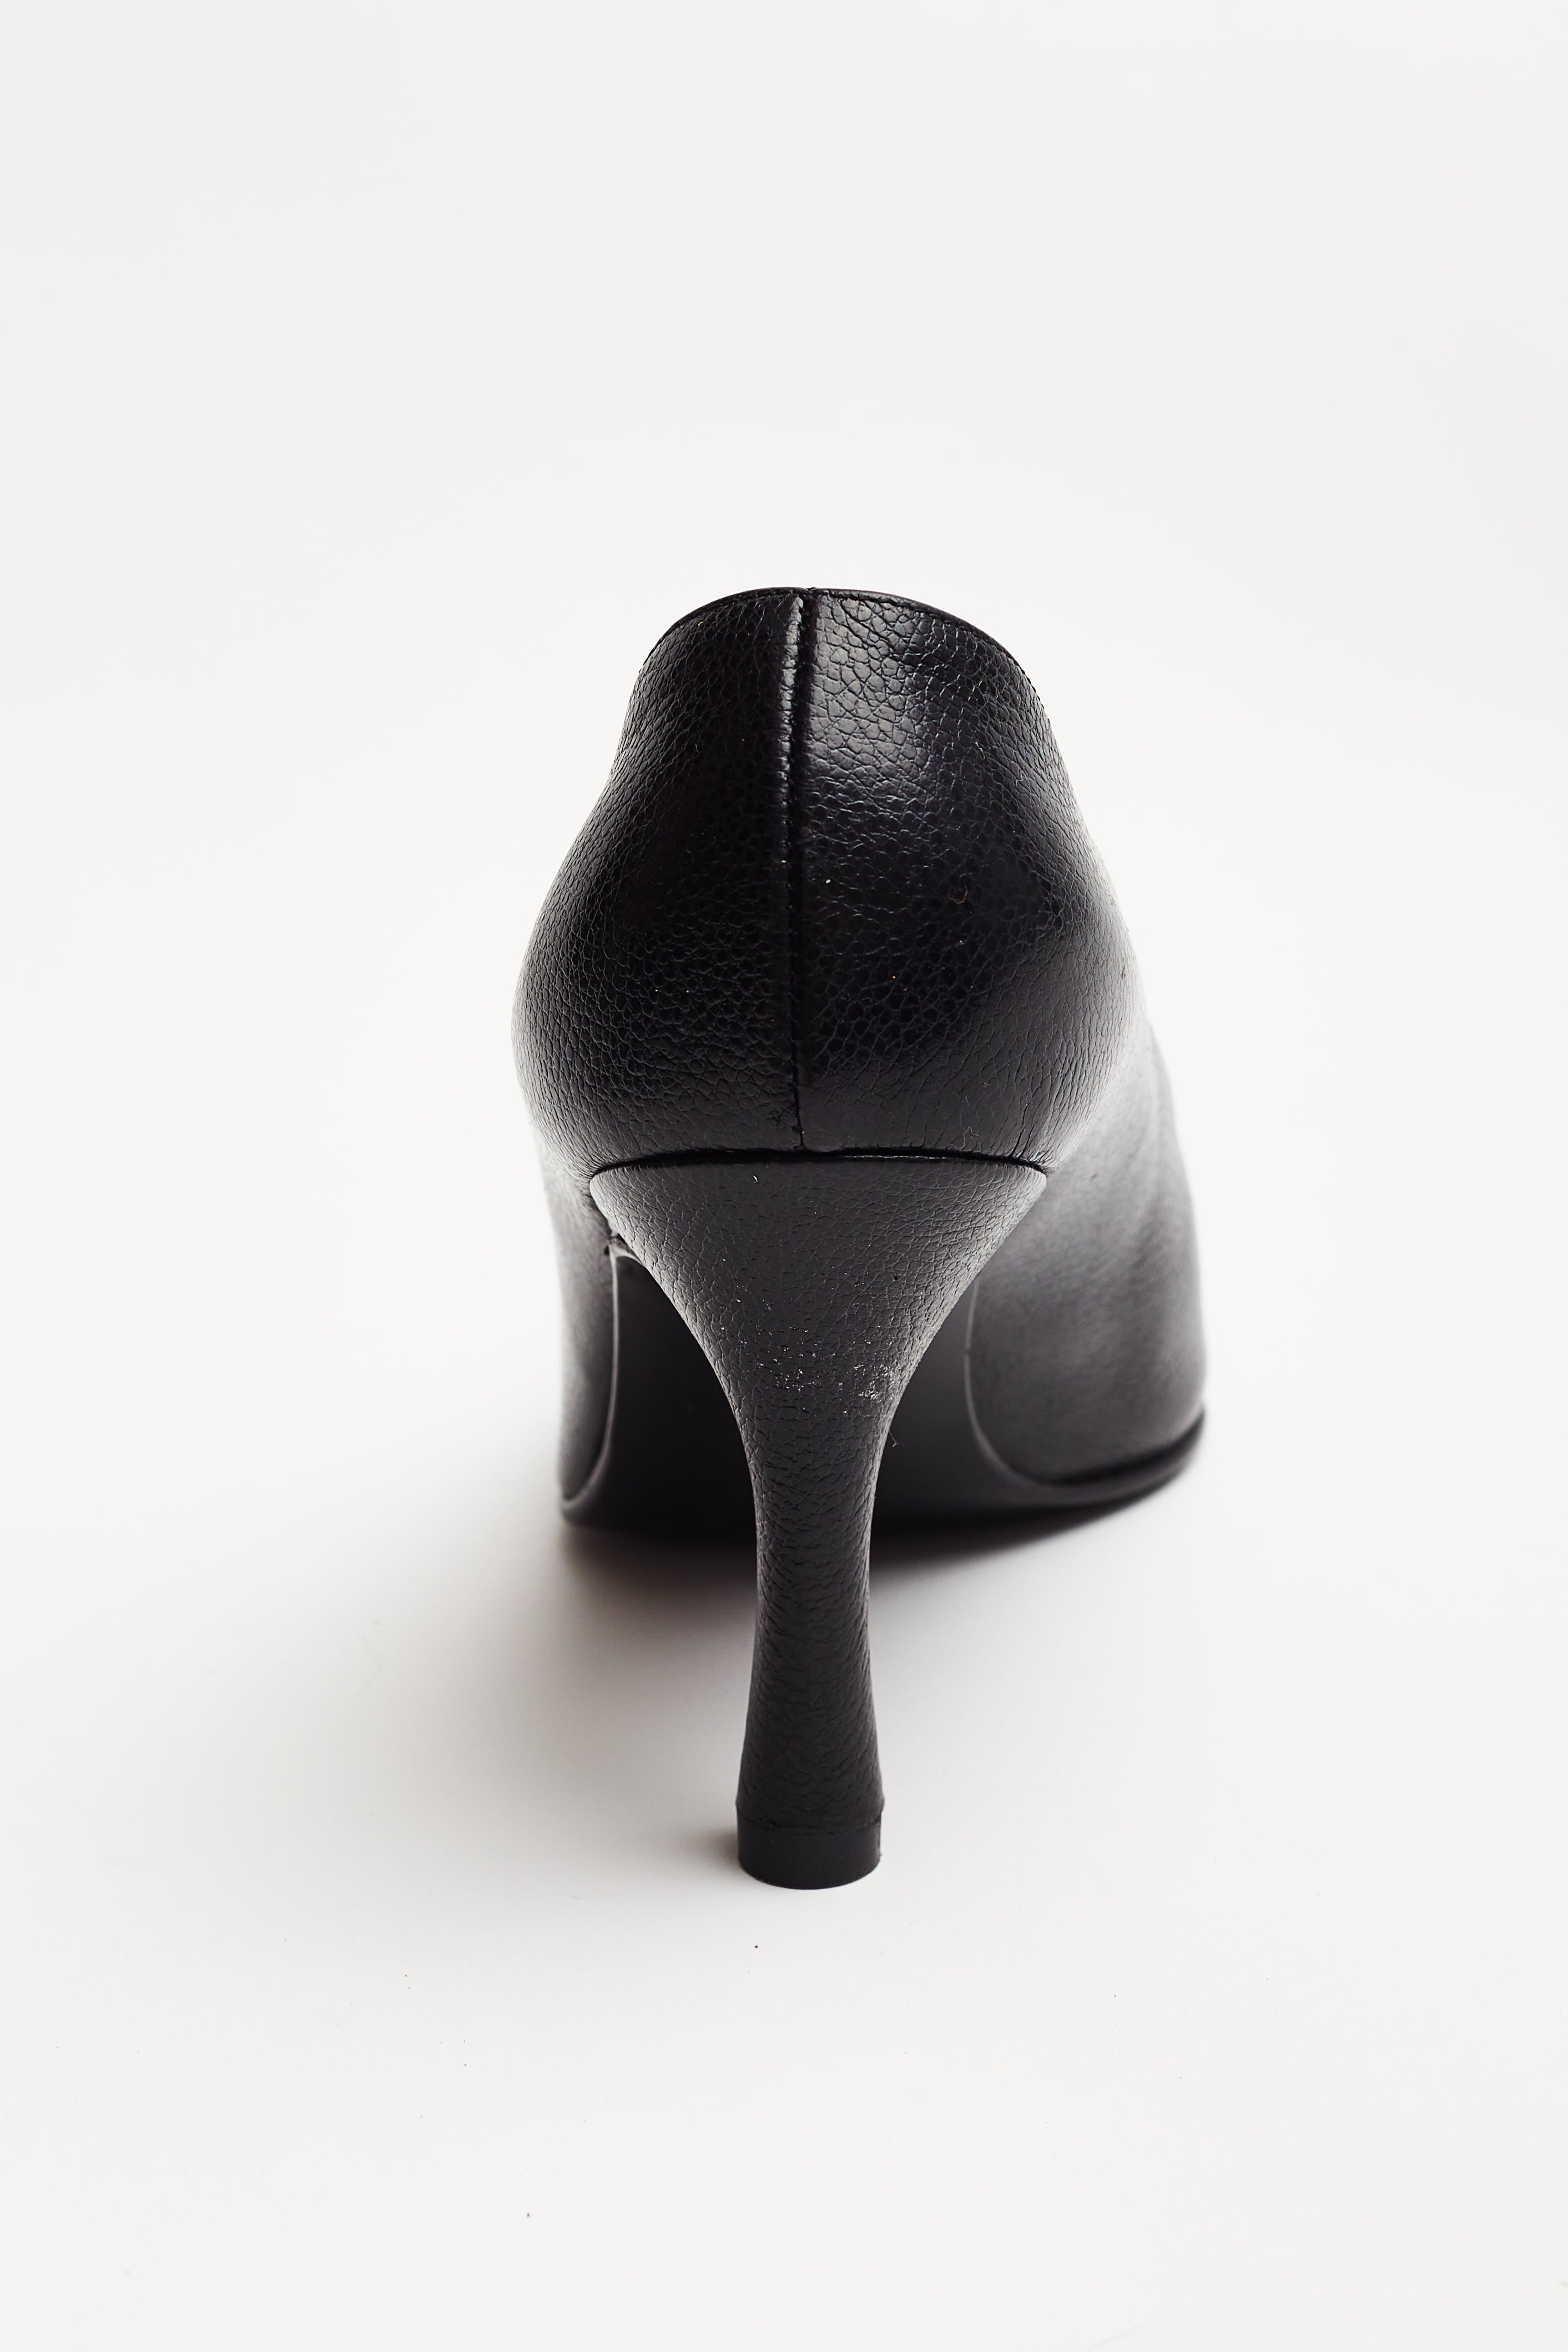 Gianni Versace <br> F/W 1994 Medusa buckle heeled loafers